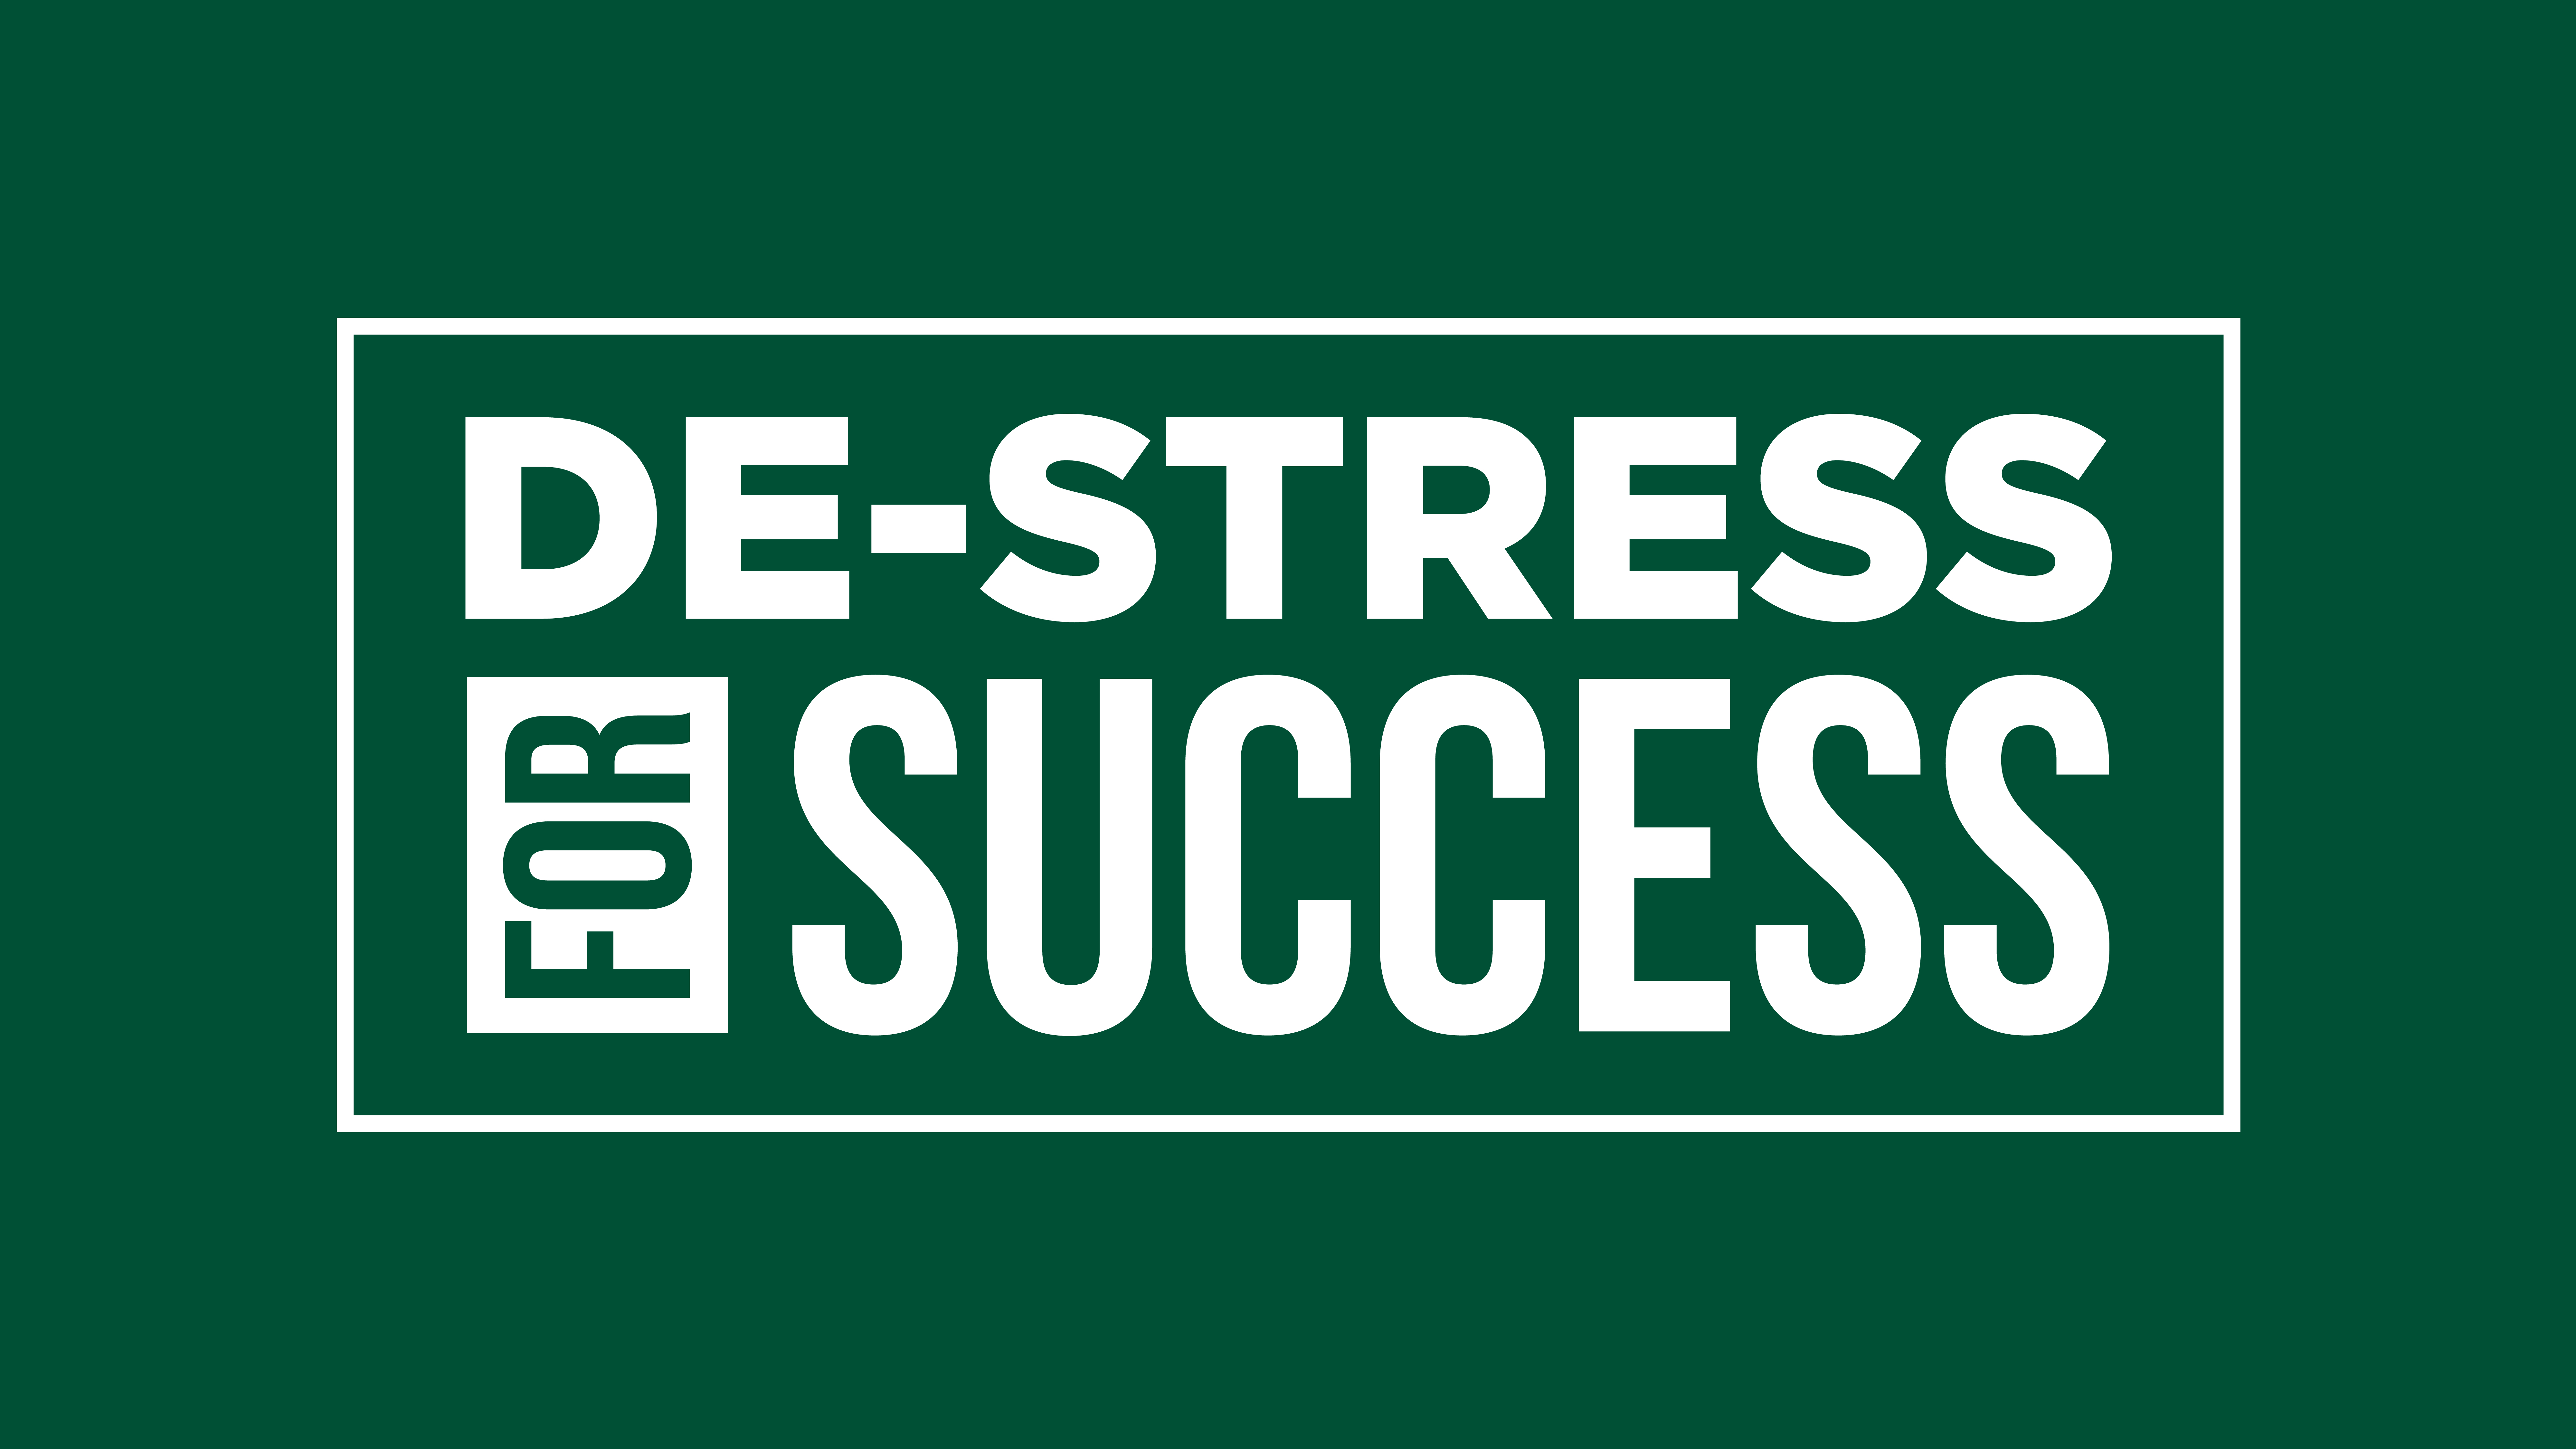 De-stress for Success graphic